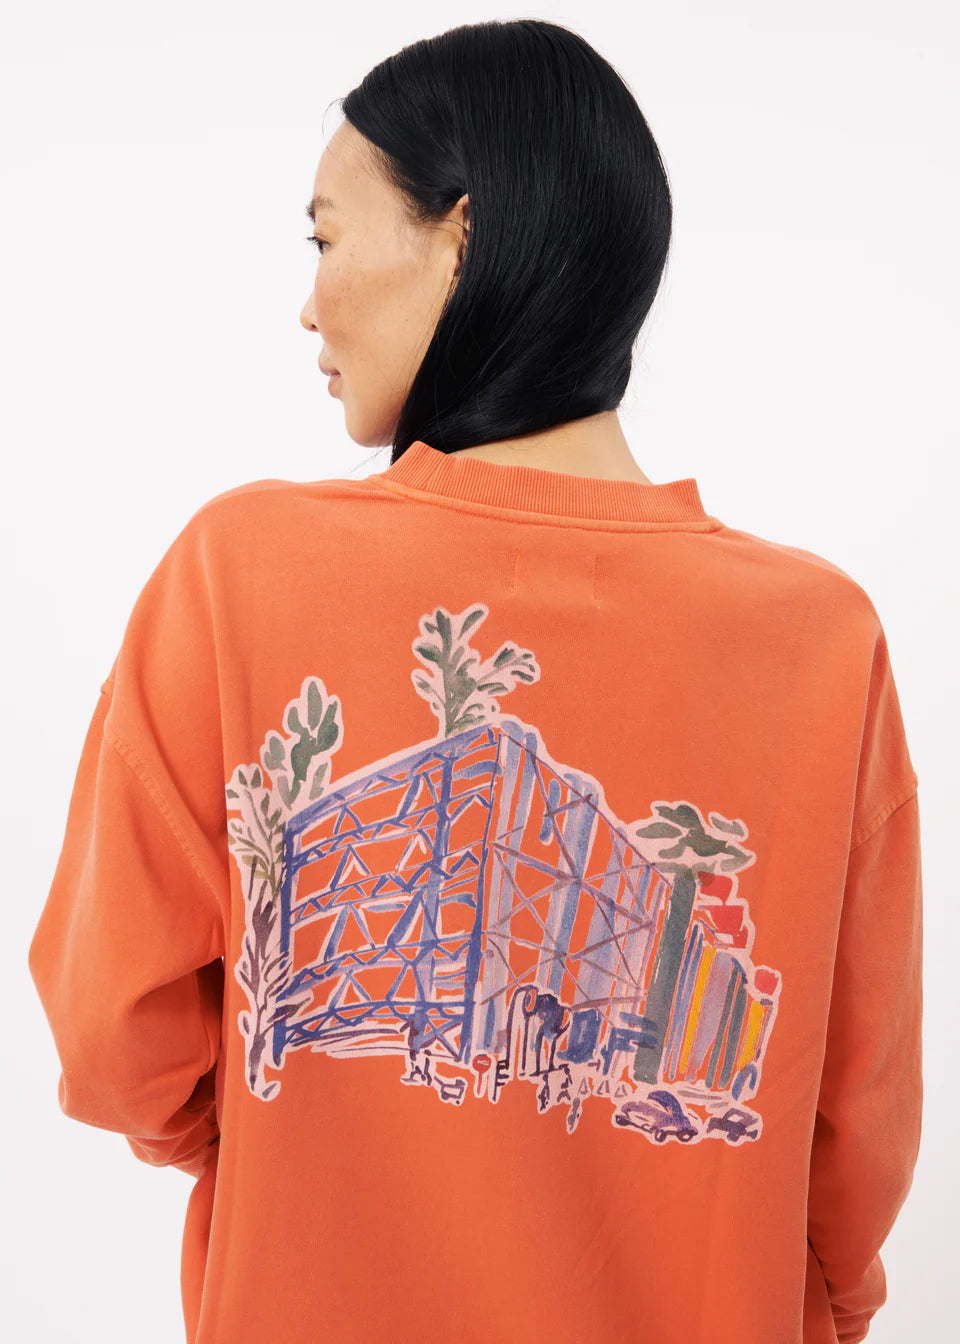 Athenais Orange Sweatshirt | Frnch